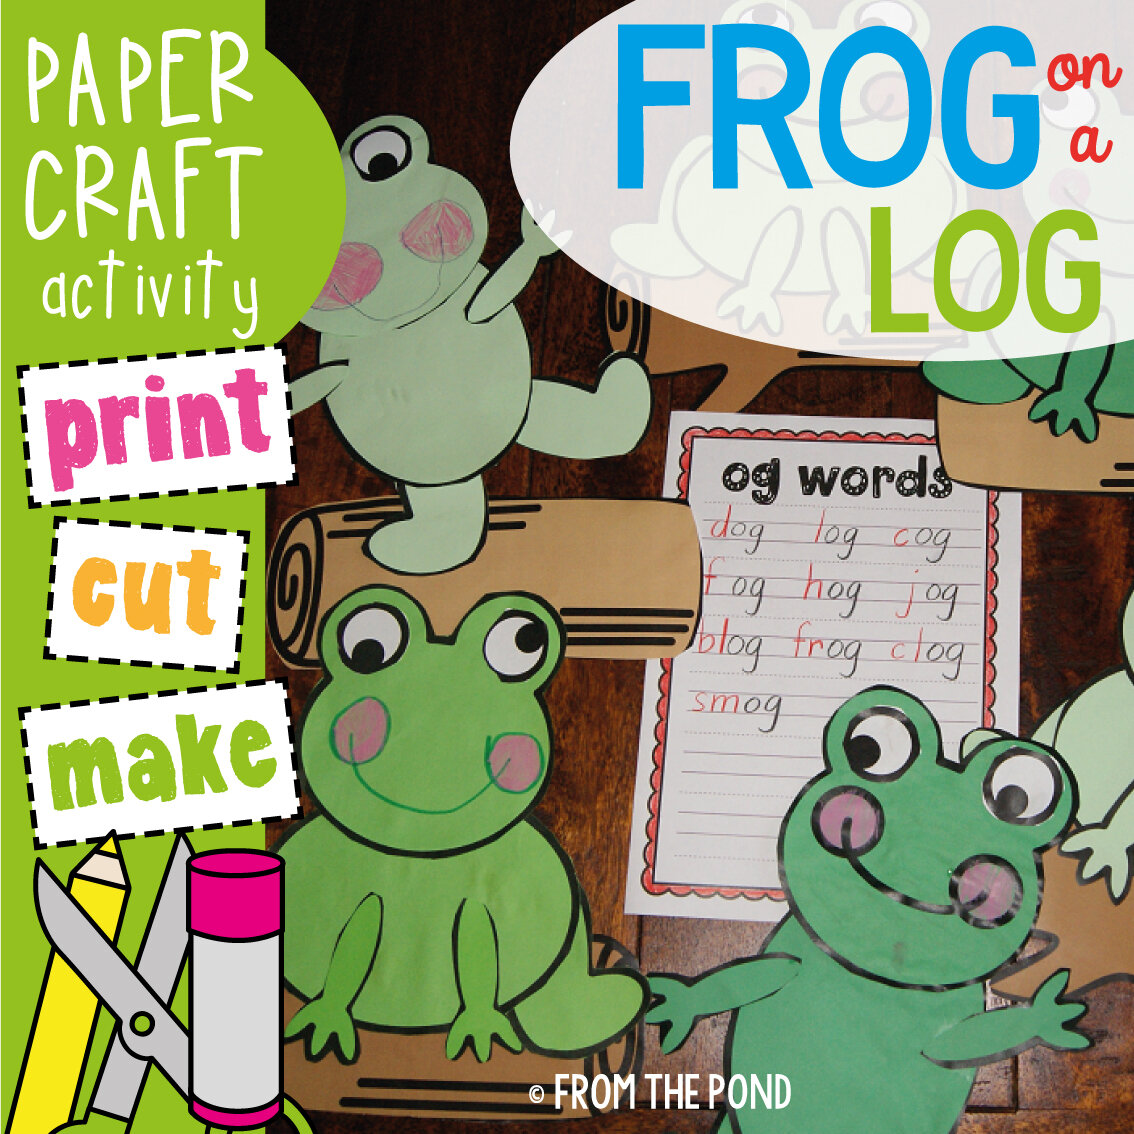 Frog on a Log Craft